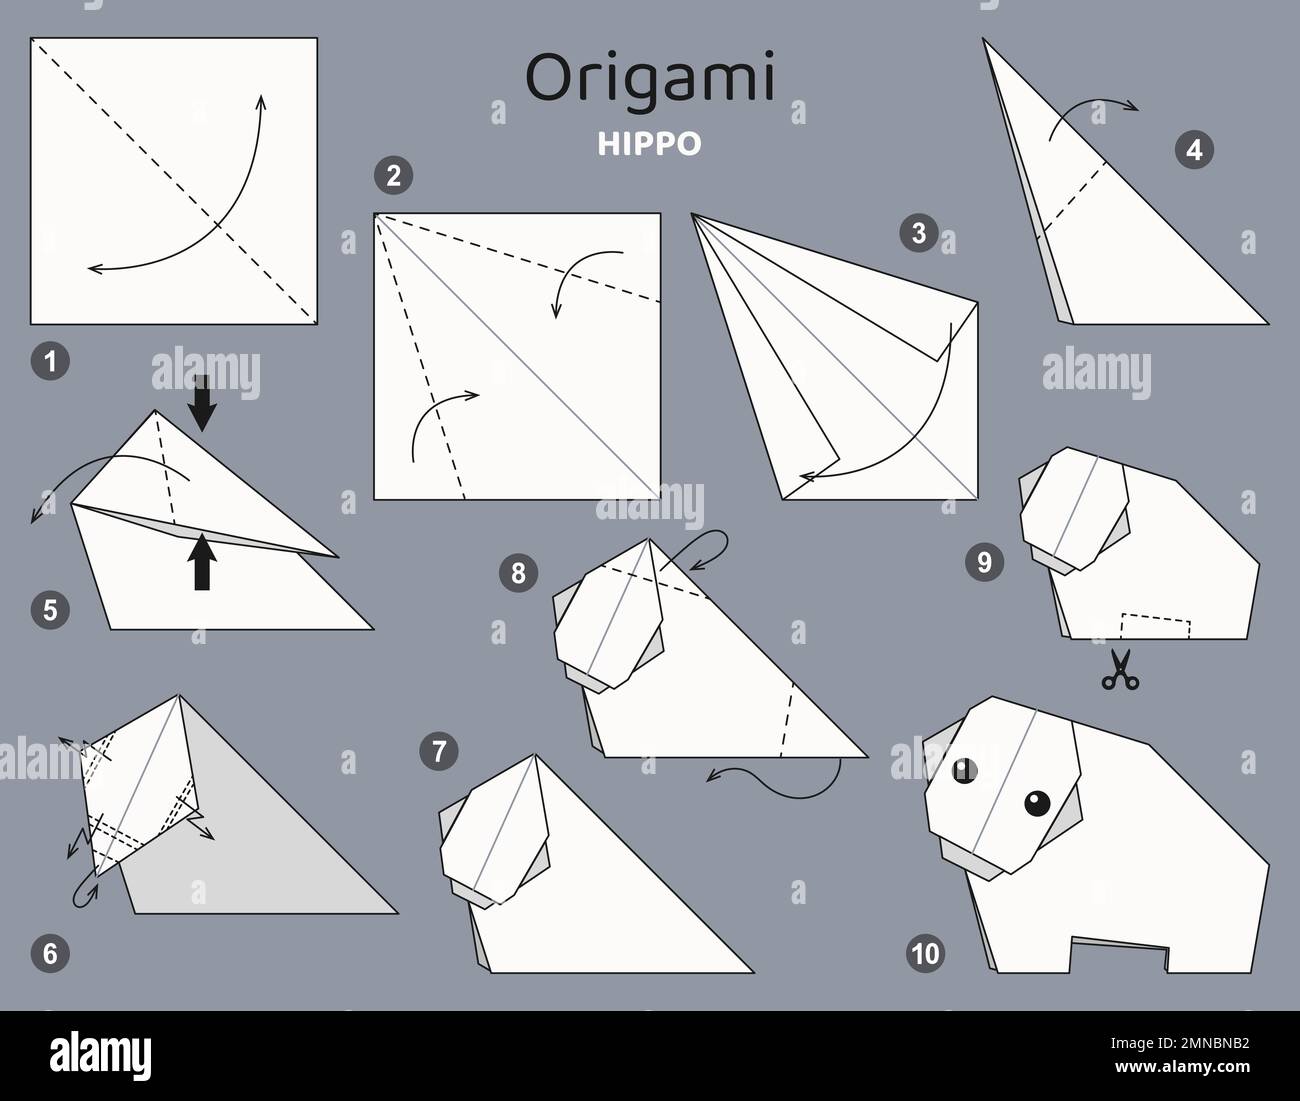 Origami tutorial. Origami scheme Hippo for kids . Stock Vector